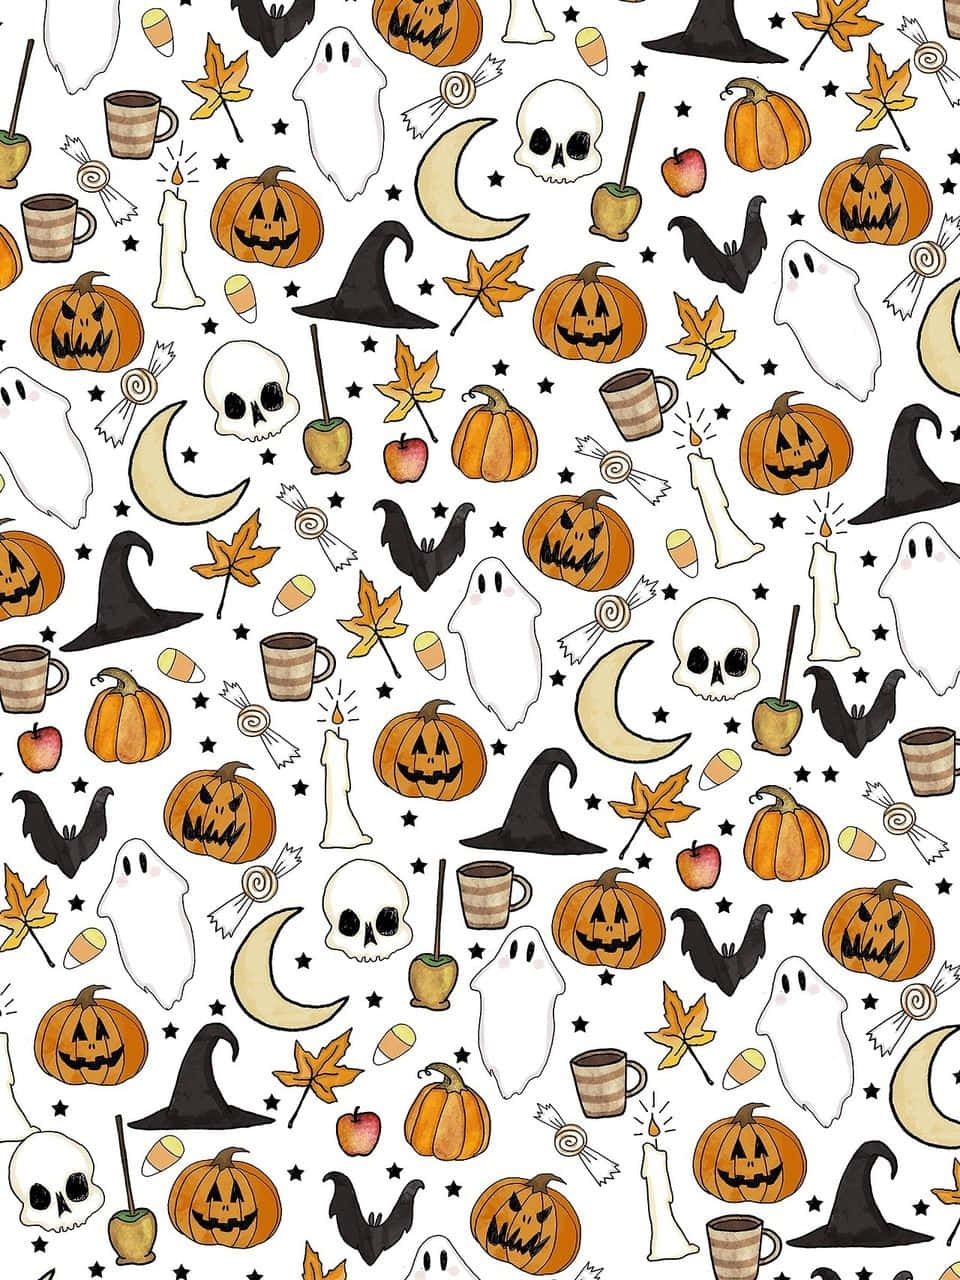 Halloweentumblr Ästhetik Spukiges Zeichnungsmuster Wallpaper